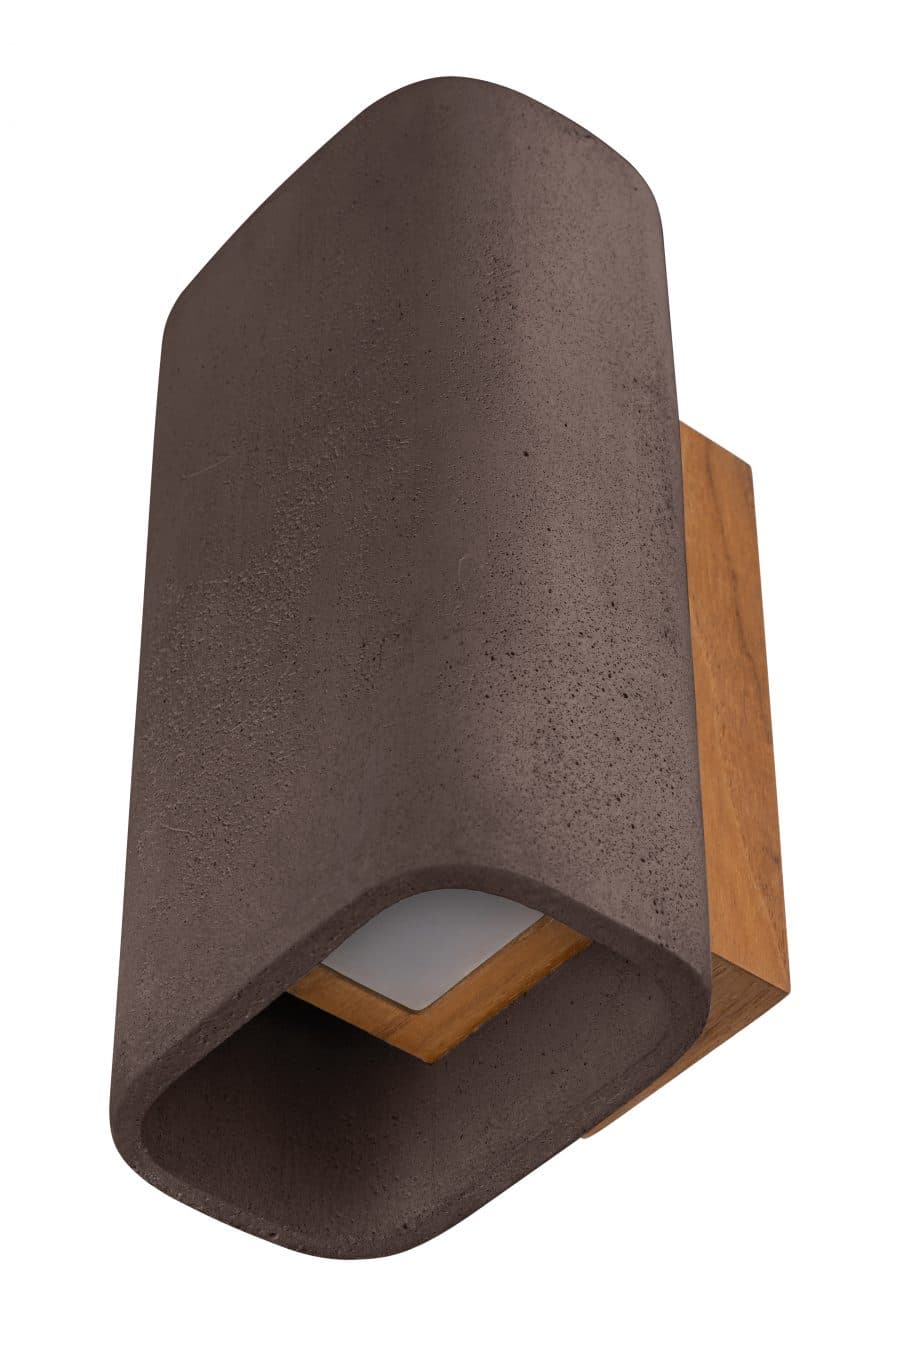 Con Teak loftlight bruin chocolate buitenlamp beton concrete teak tuinextra kaatsheuvel